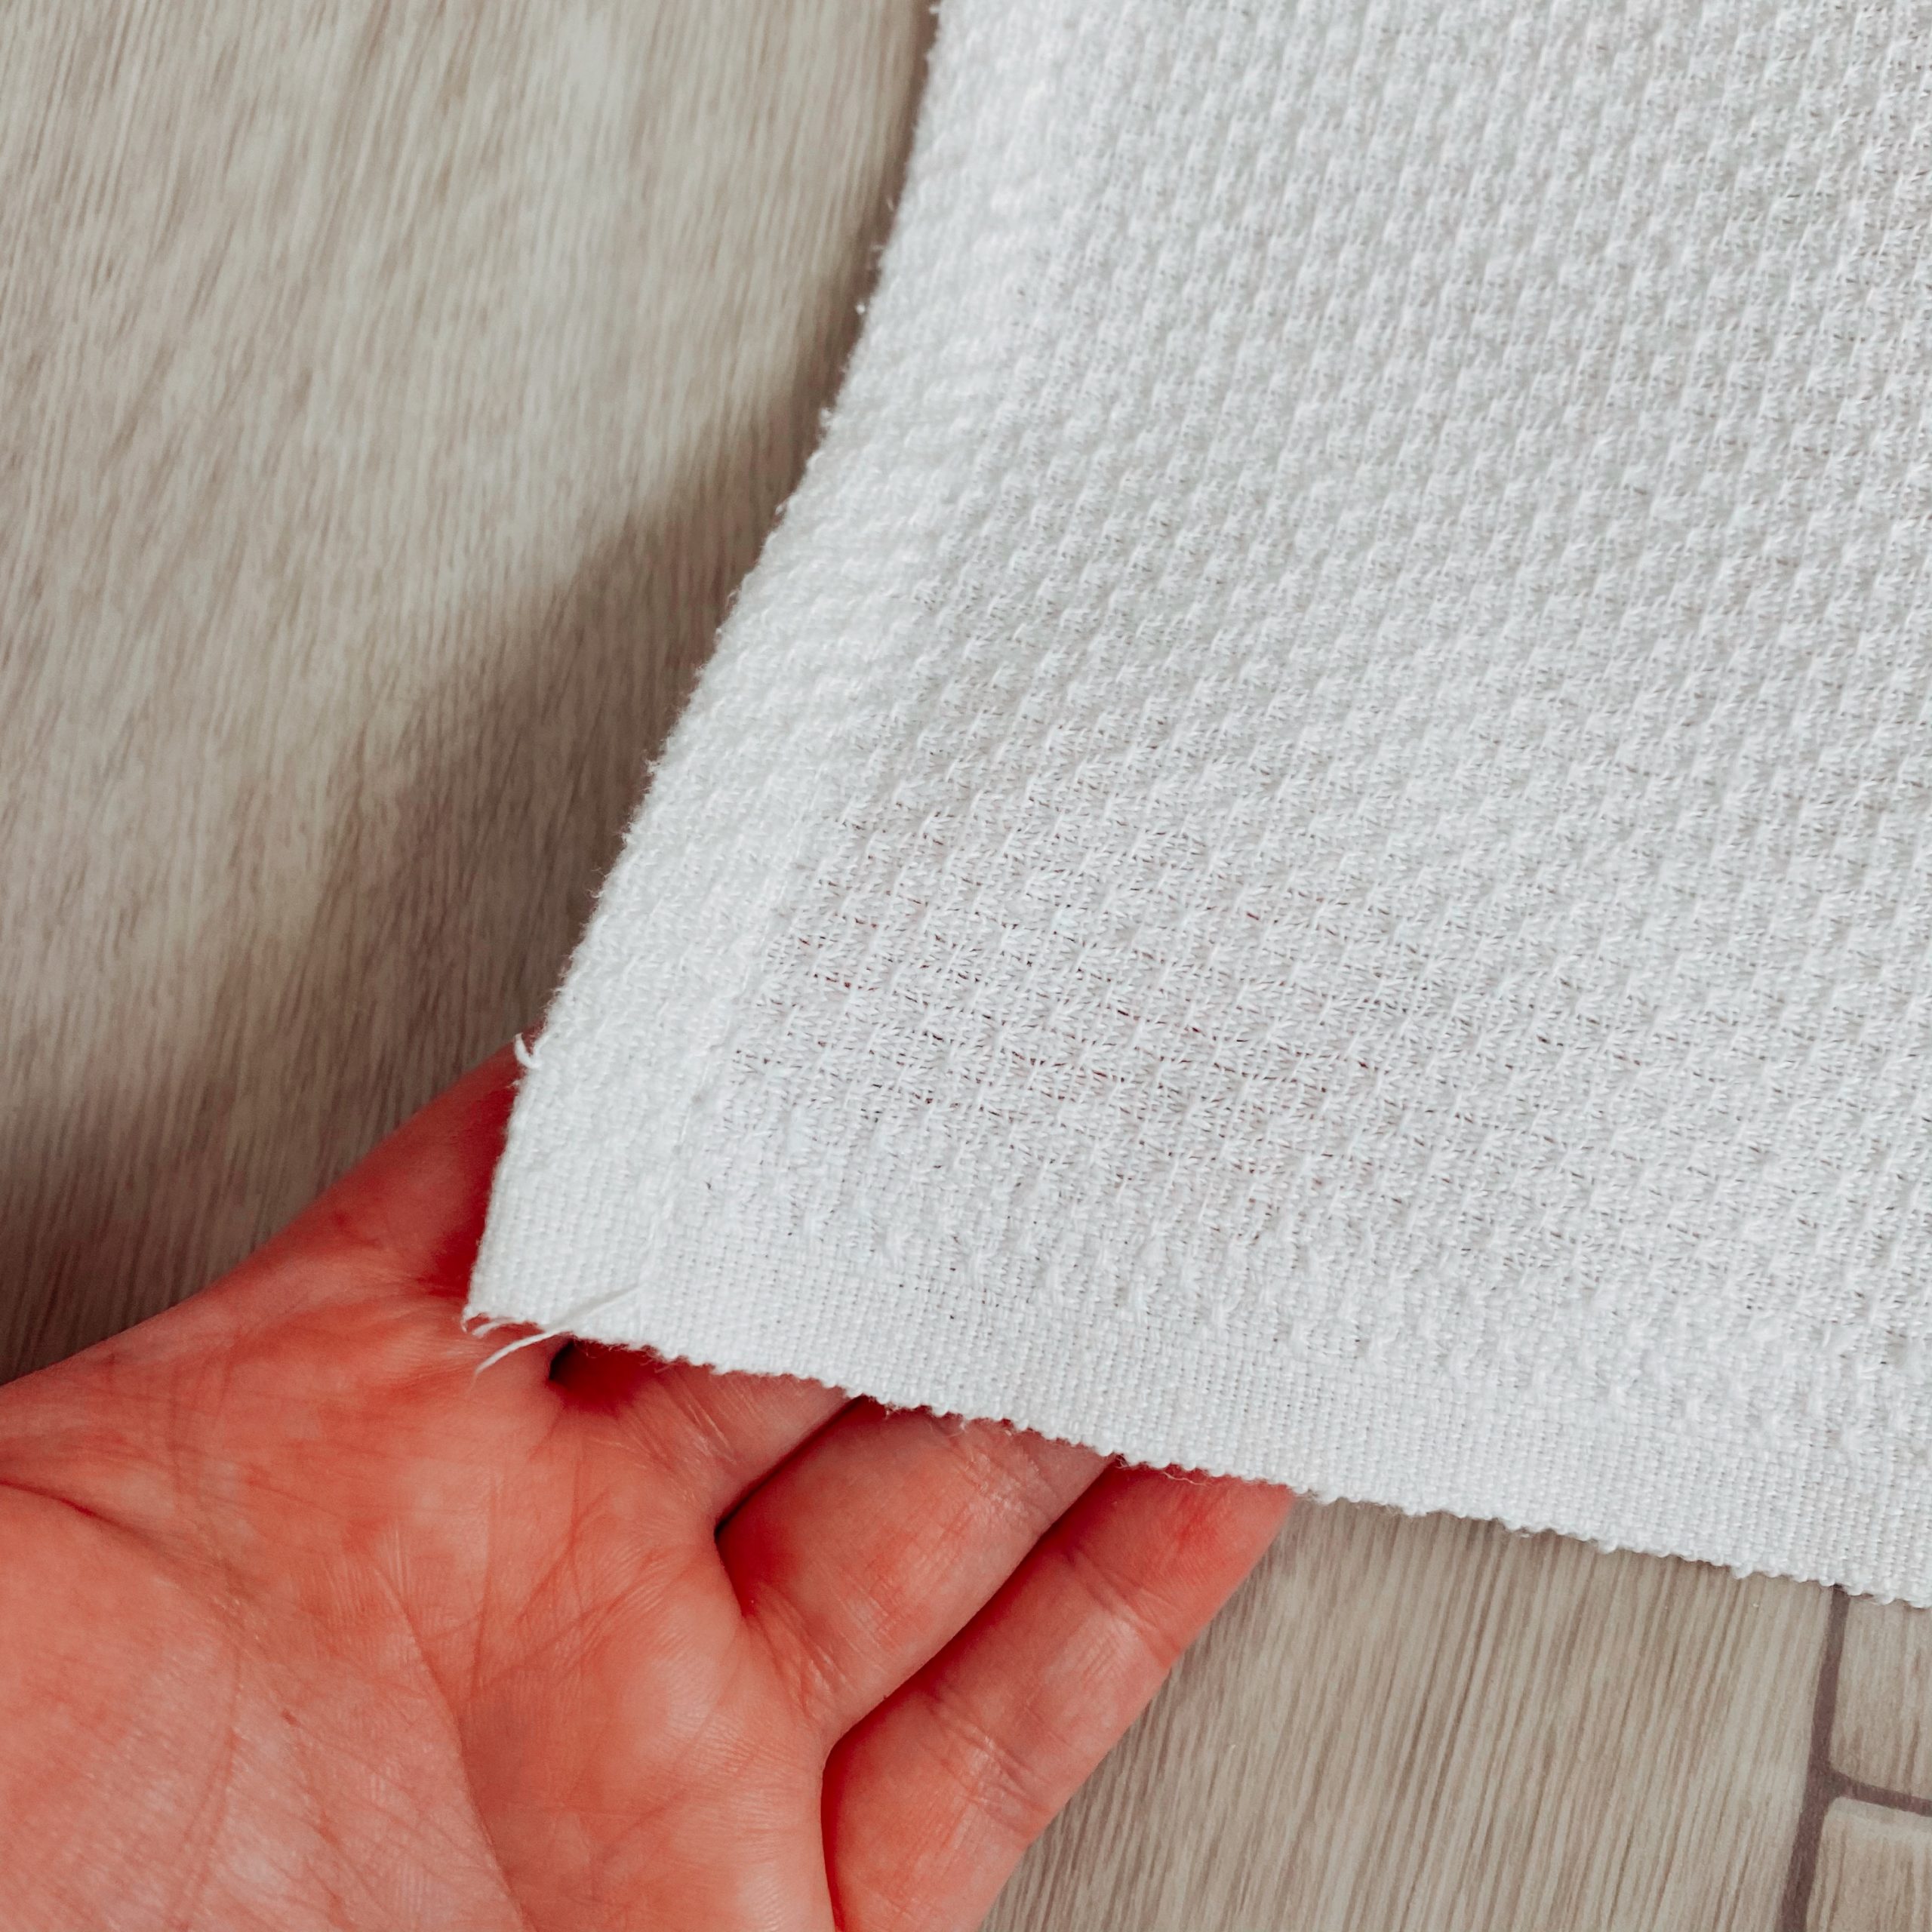 https://cottoncreations.com/content/uploads/2021/02/Craft-Huck-towel-6-scaled.jpg